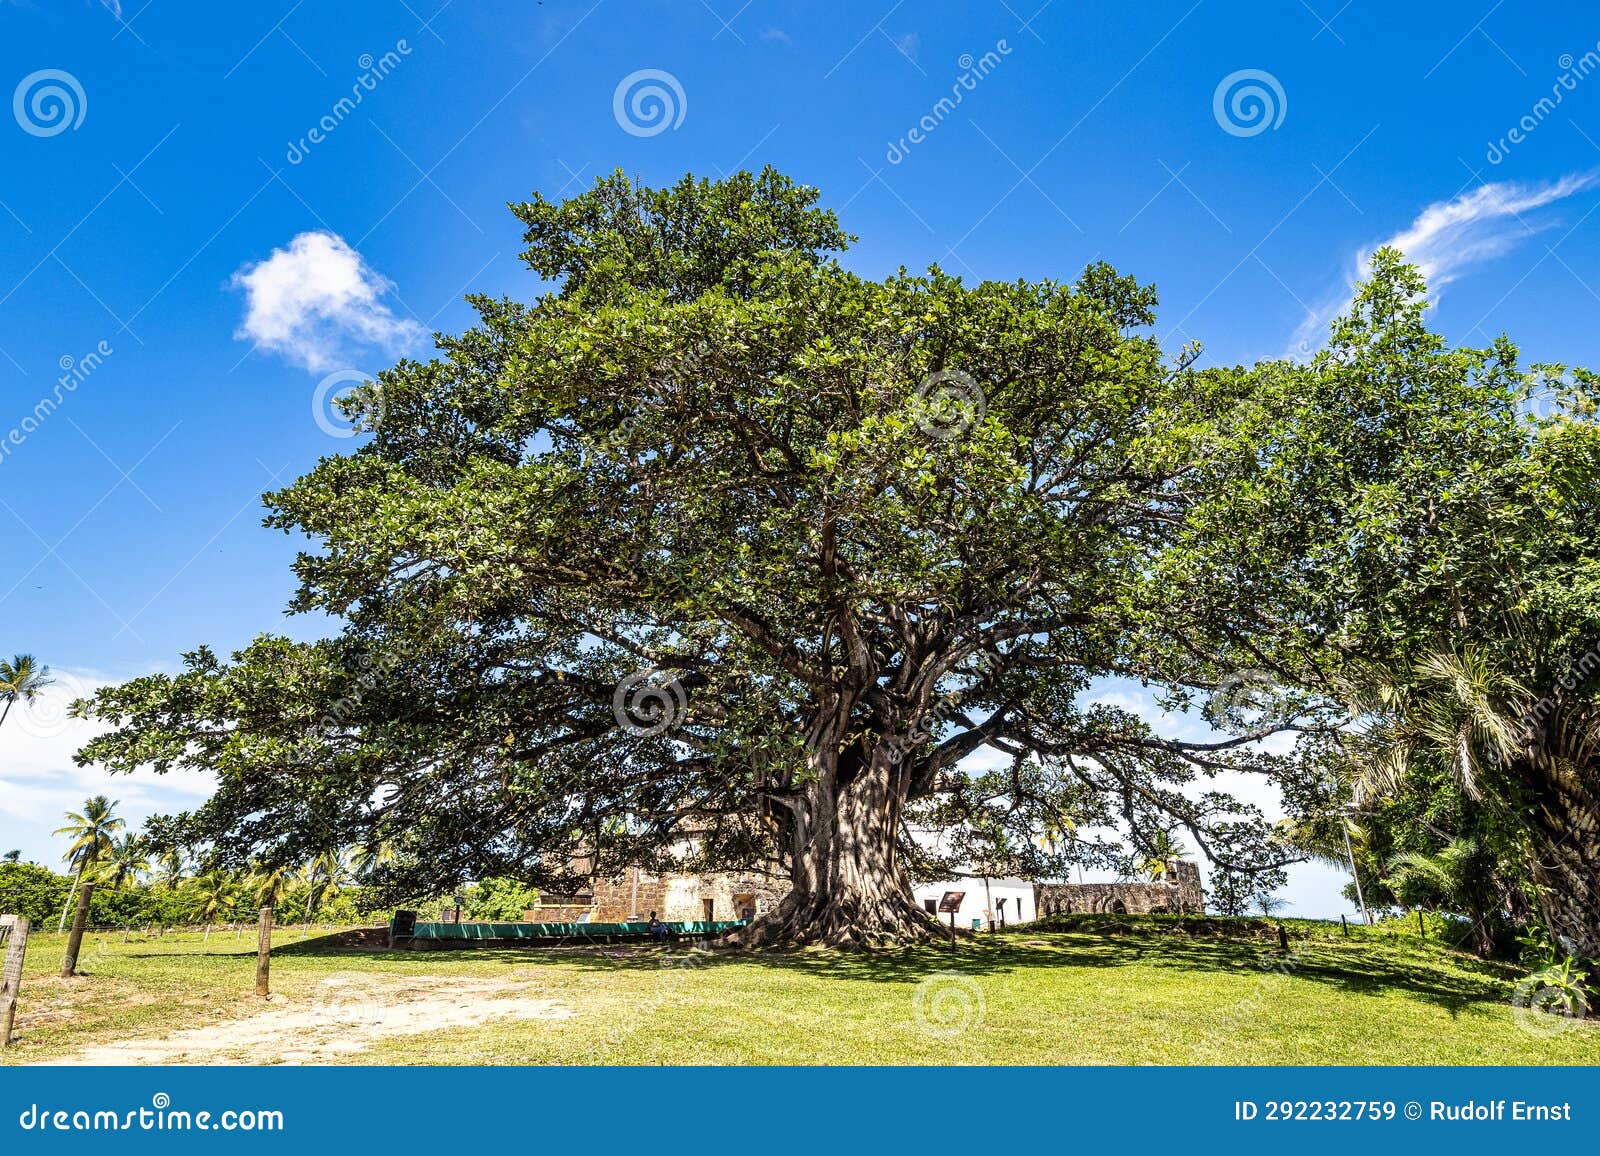 big ficus tree in front of the garcia d'avila castle, in the praia do forte, mata de sao joao, bahia, brazil